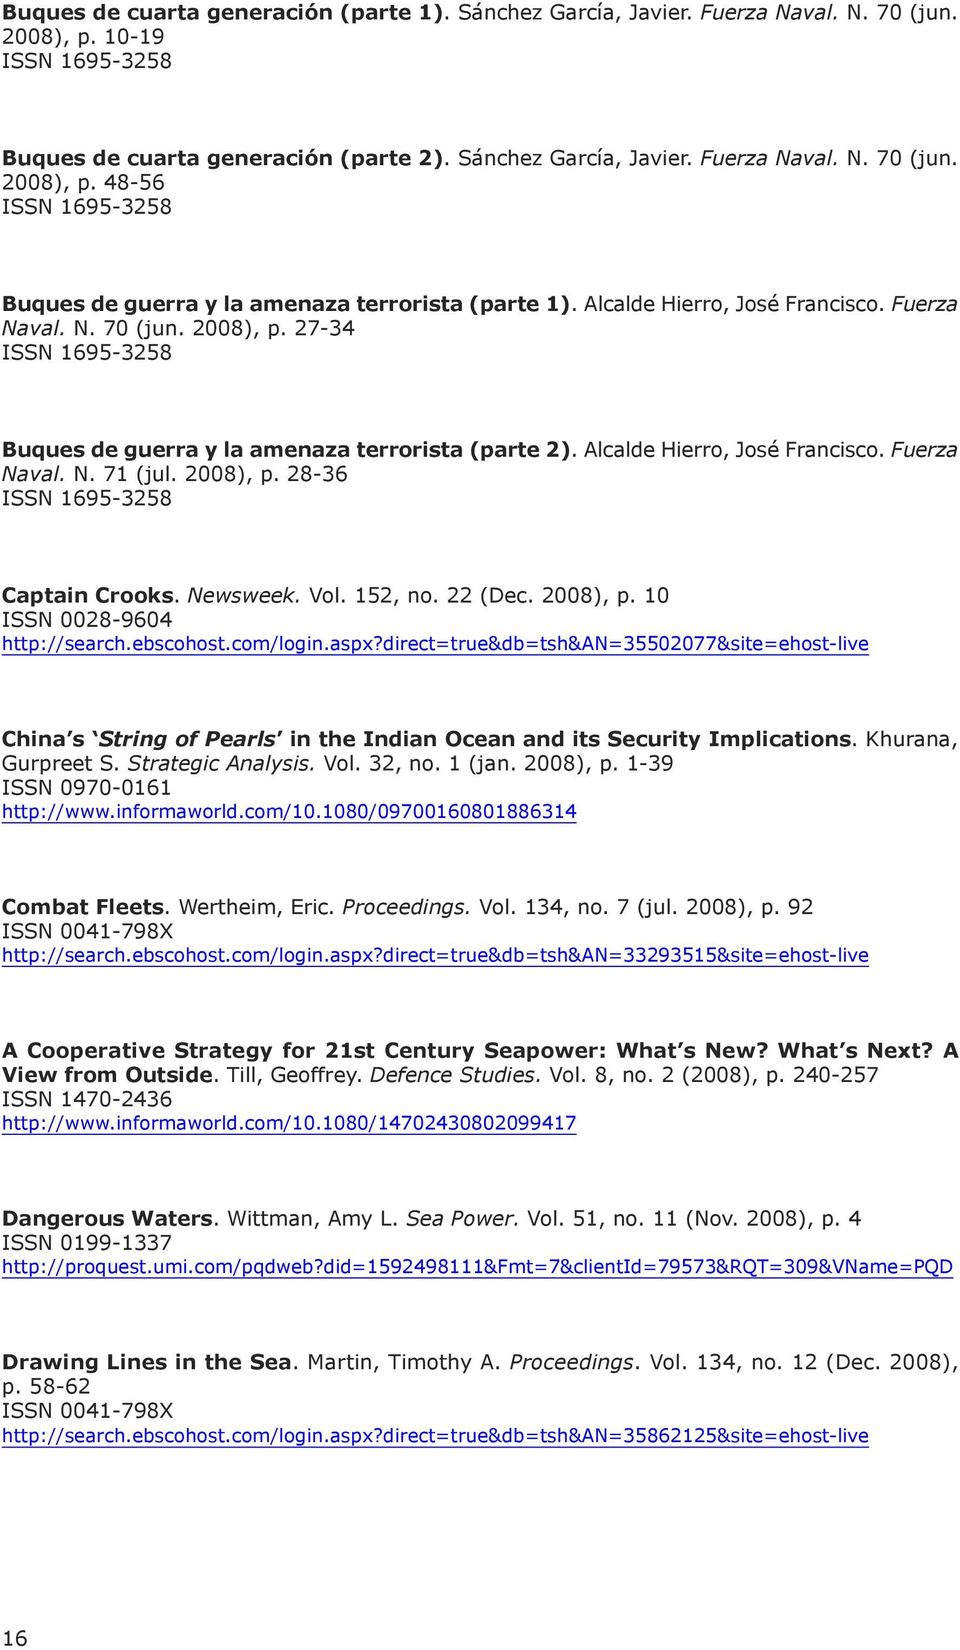 2008), p. 28-36 ISSn 1695-3258 captain crooks. Newsweek. Vol. 152, no. 22 (Dec. 2008), p. 10 ISSn 0028-9604 http://search.ebscohost.com/login.aspx?